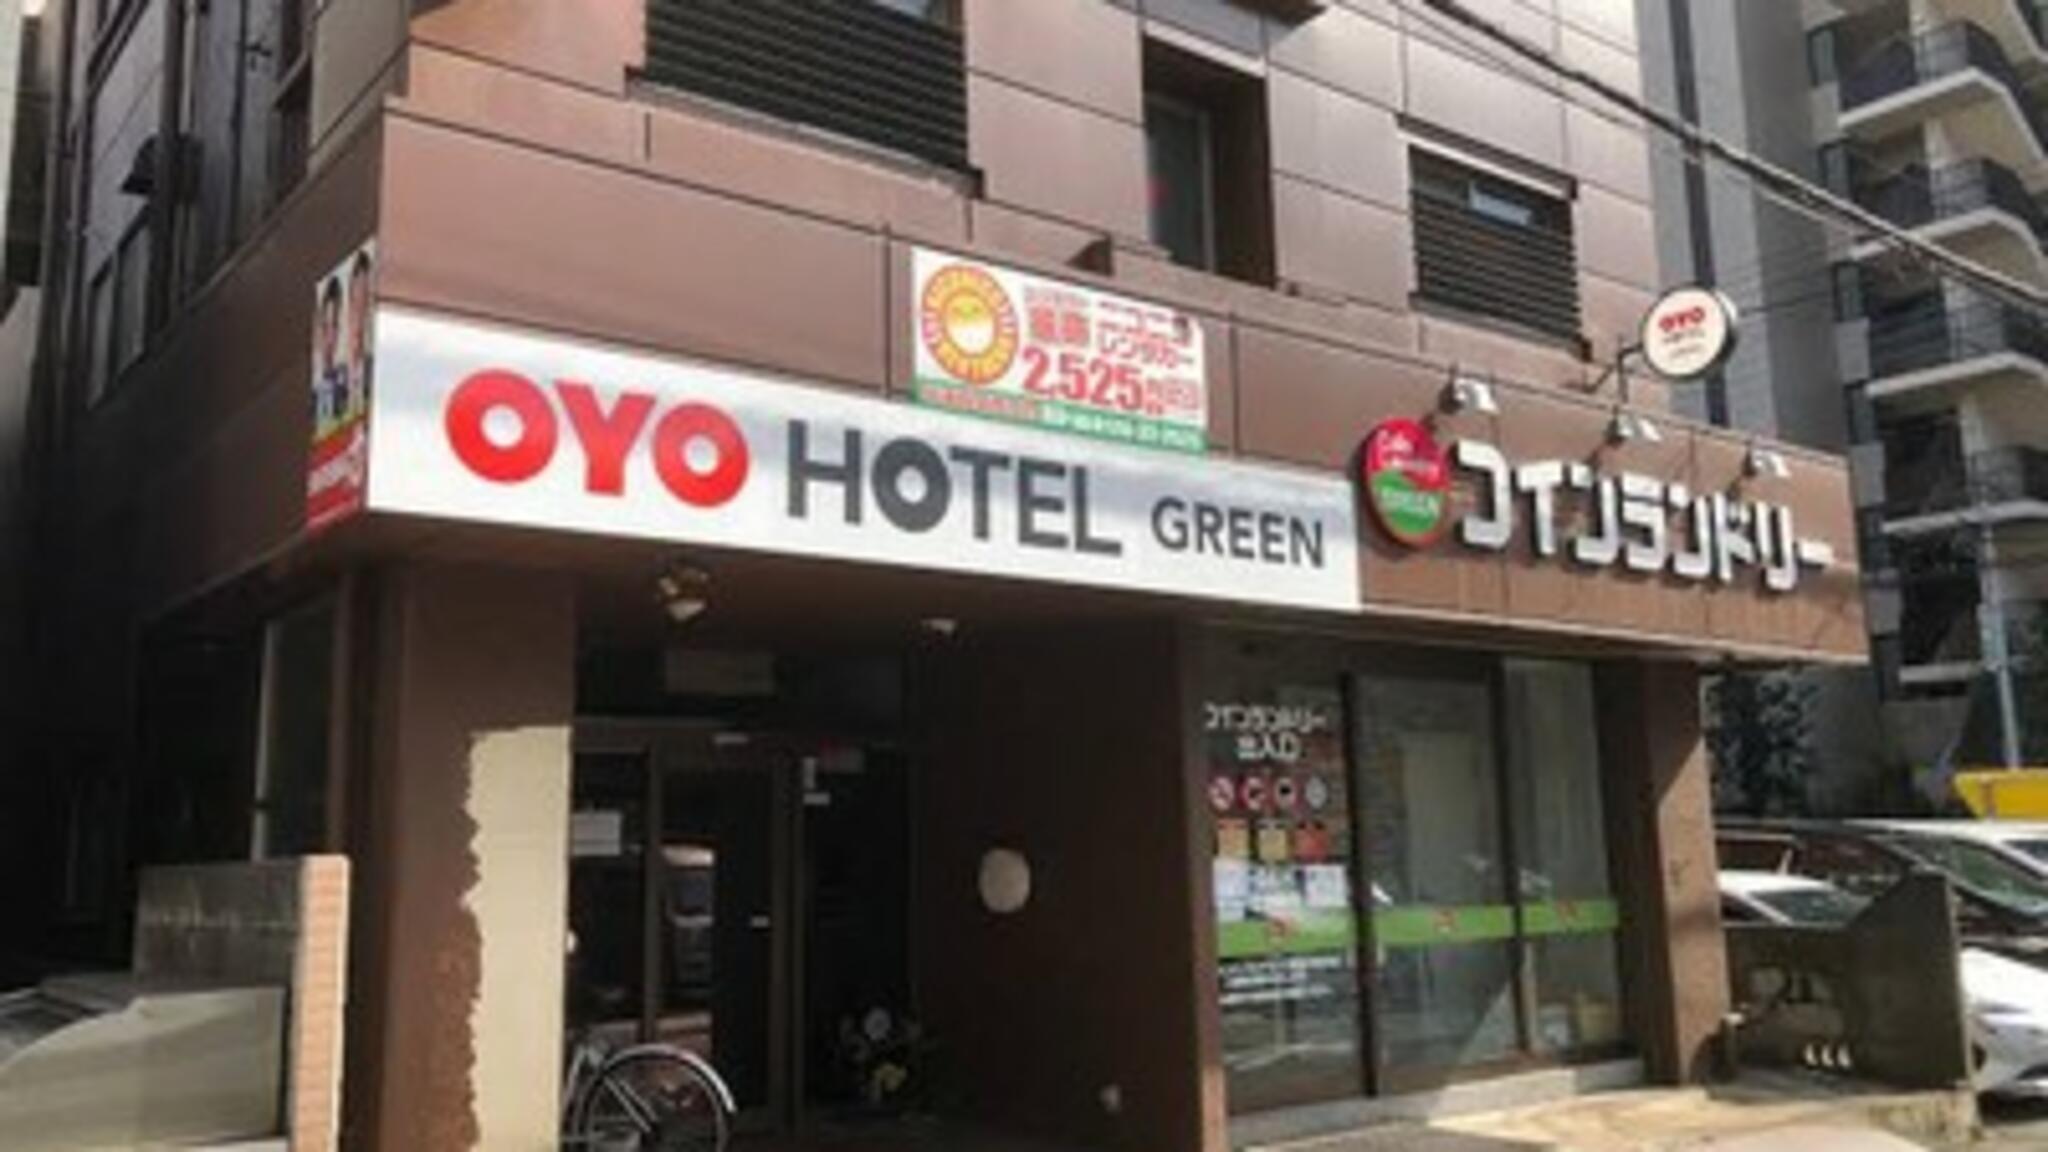 OYO ビジネスホテルグリーン 浦和の代表写真3